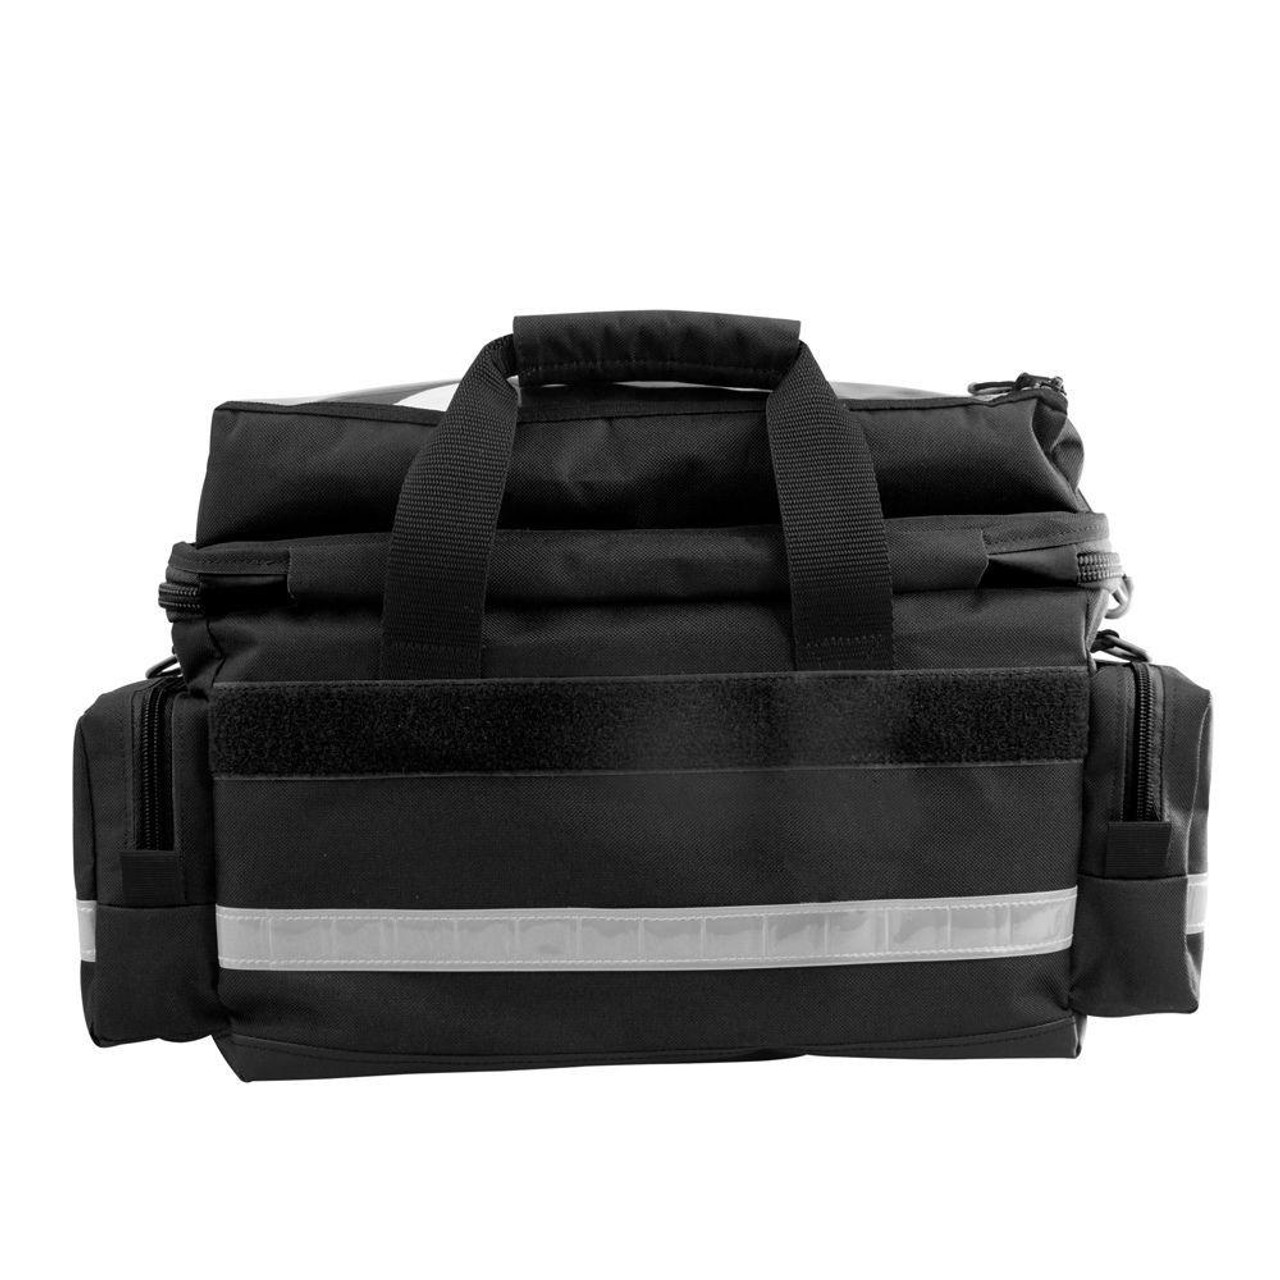 Aerocase Emergency Medical Bag Black Polyester Large 28 Litre Empty 